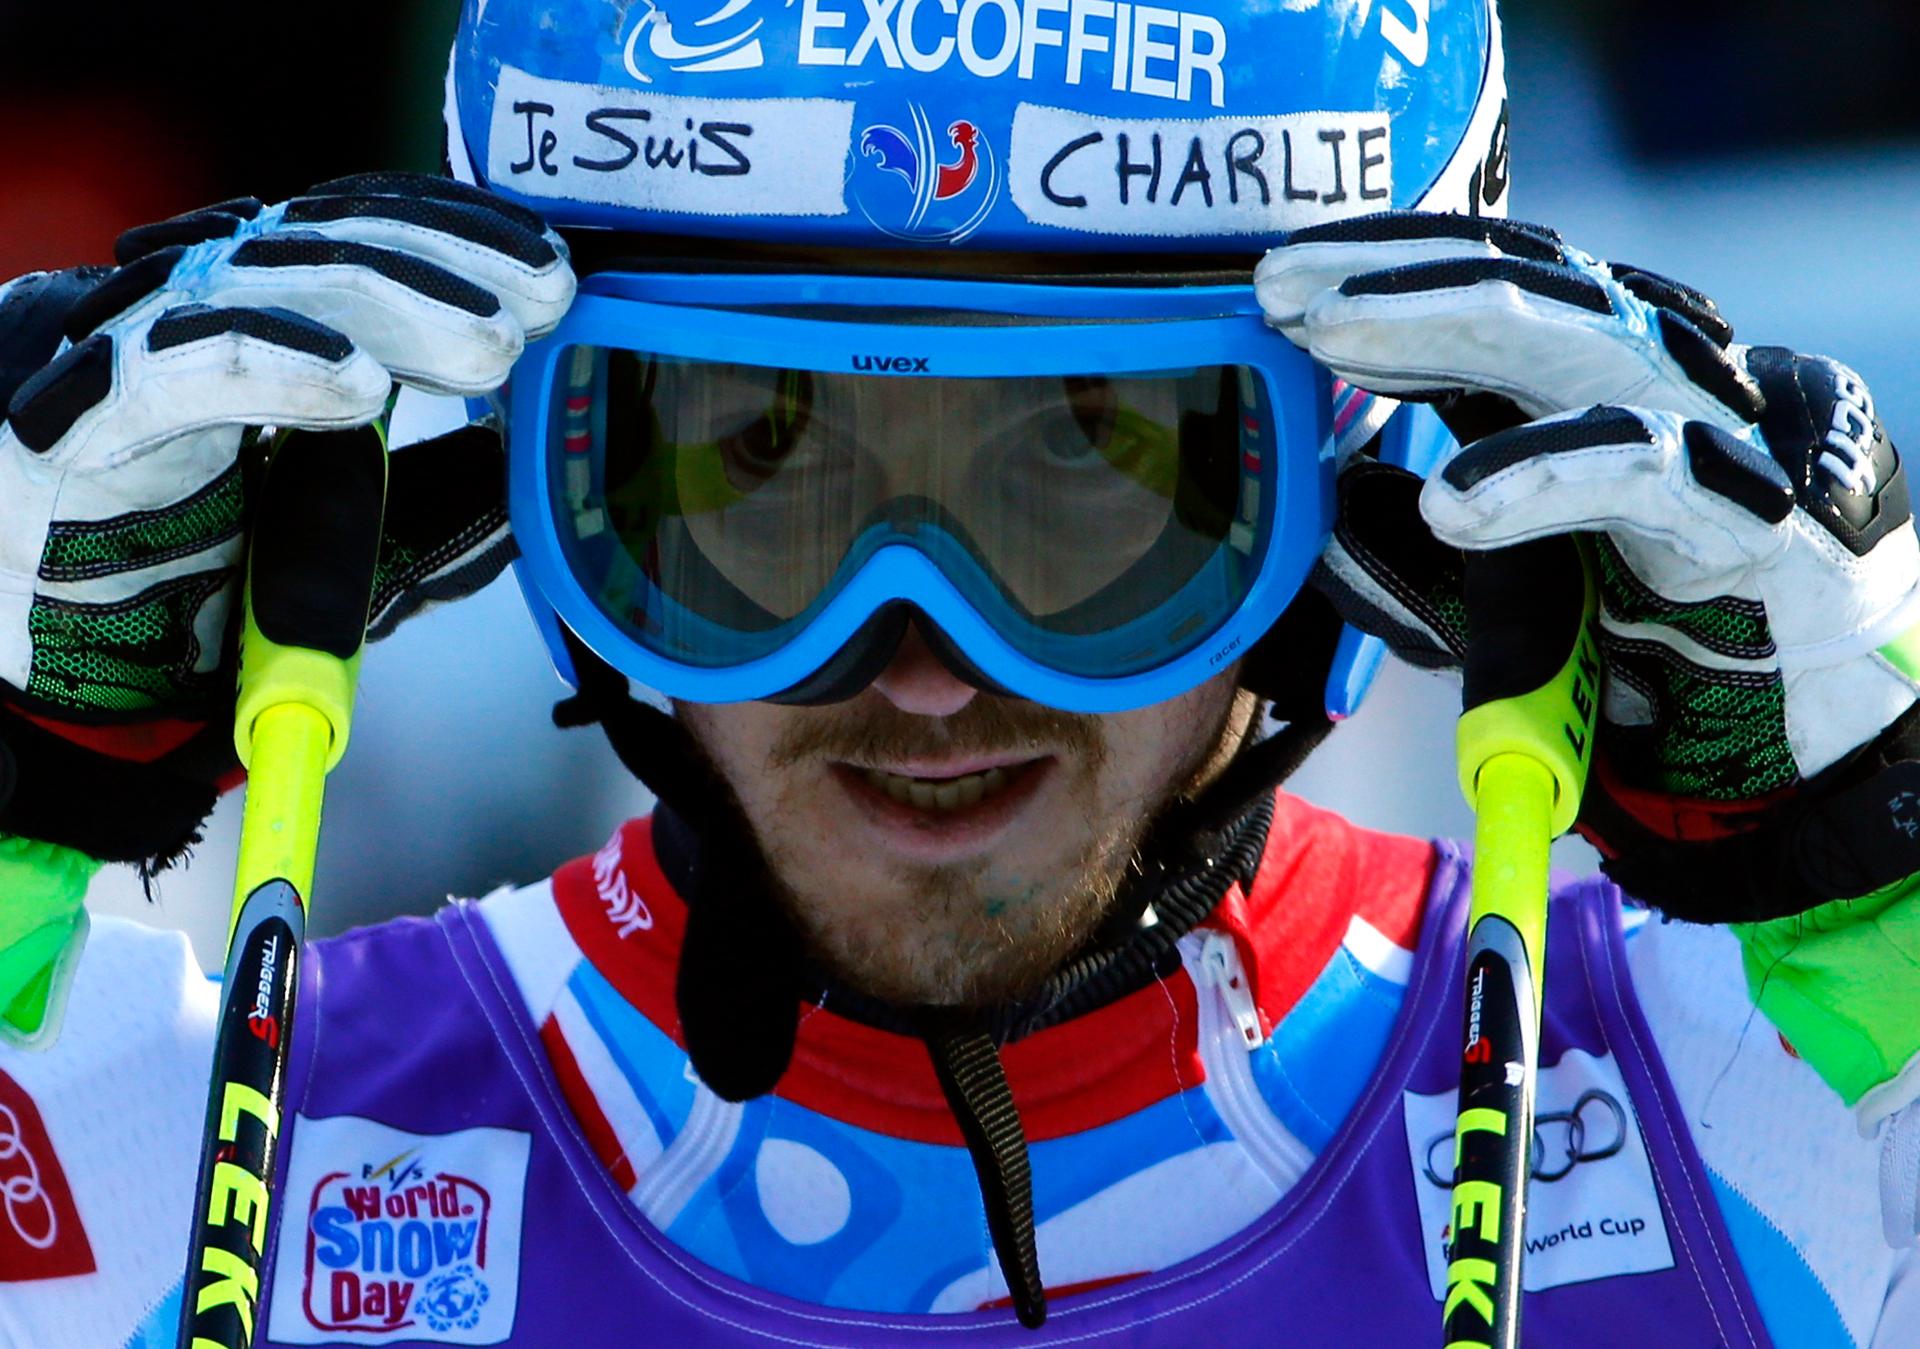 French skier Steve Missillier wears a 